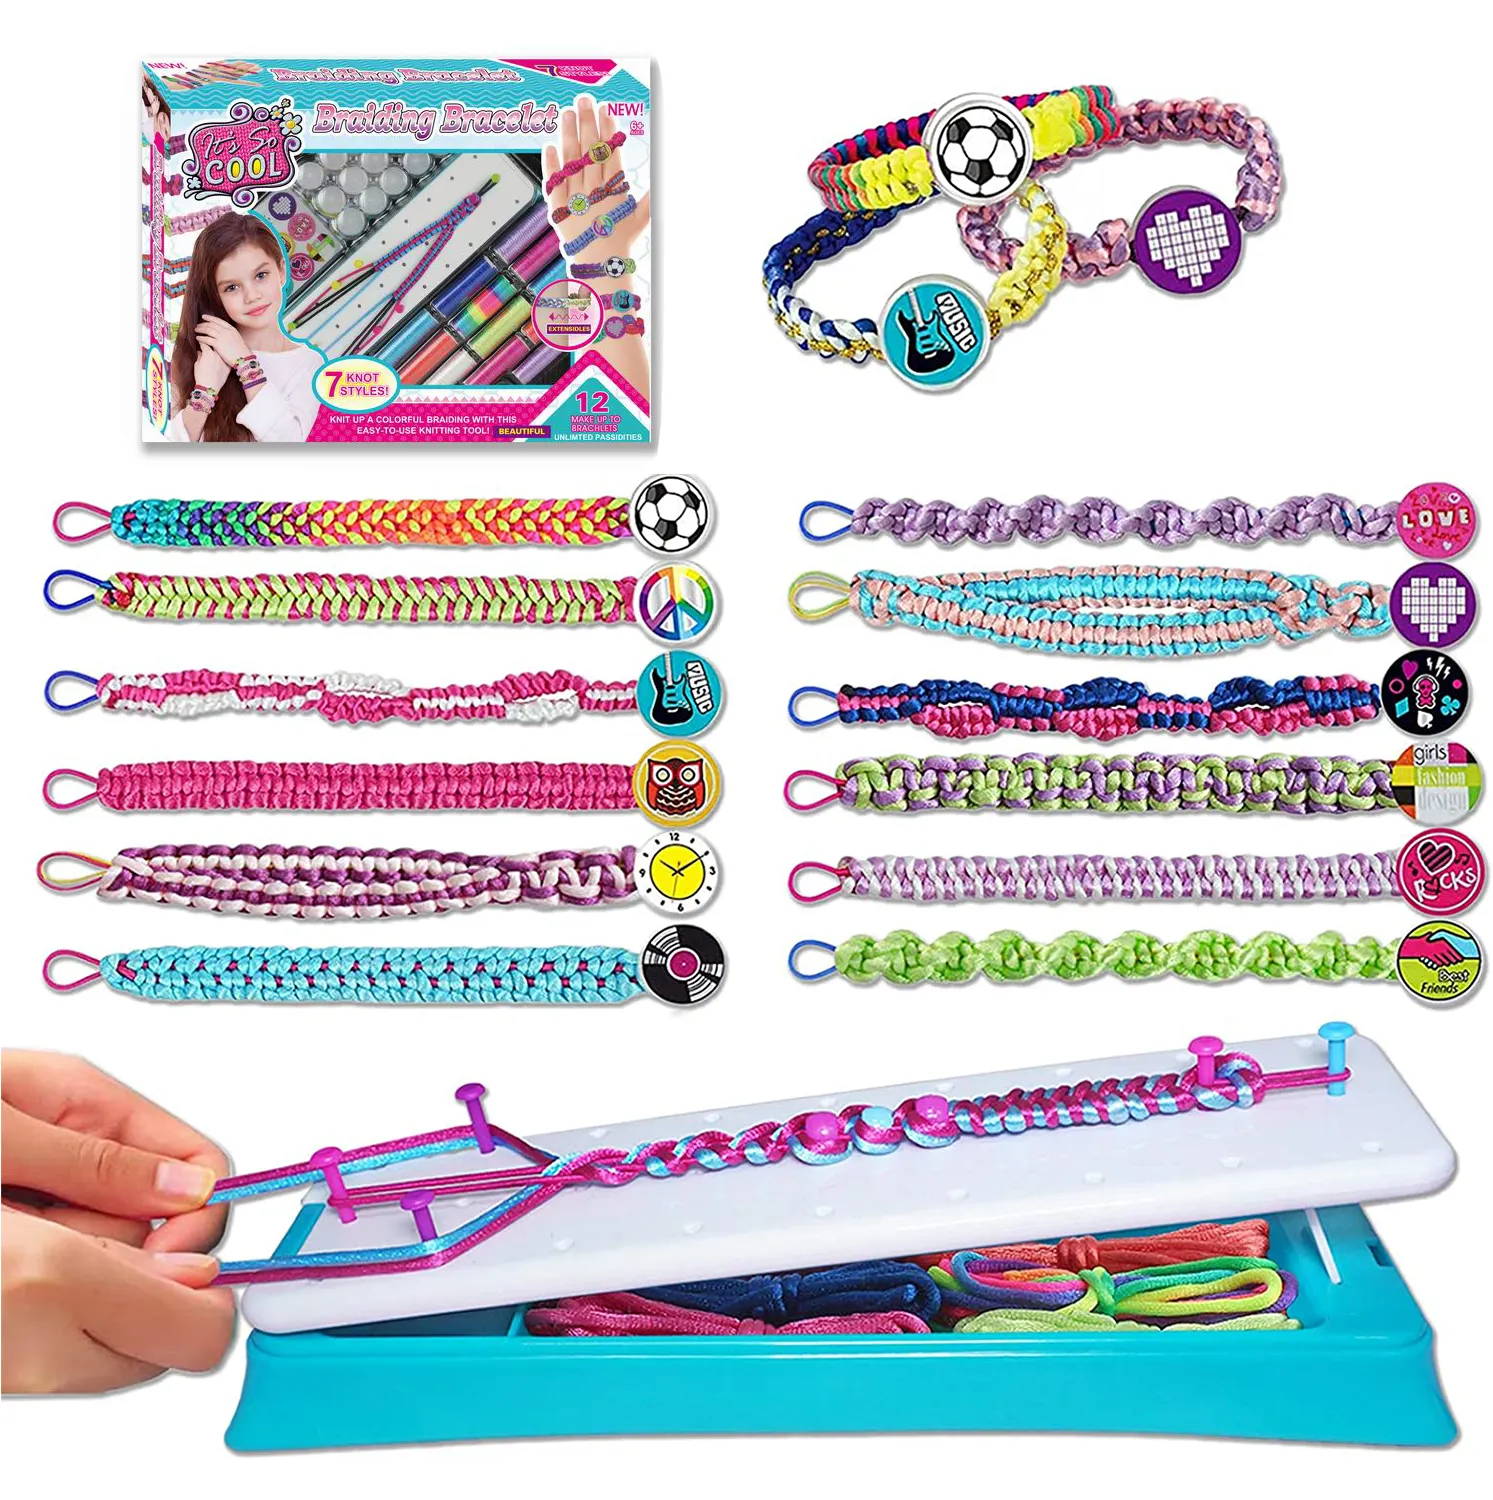 Bracelet Making Kit For Girls, DIY Craft Kits for kids 3-10 years Jewelry Maker toys girls favorite birthday christmas gift